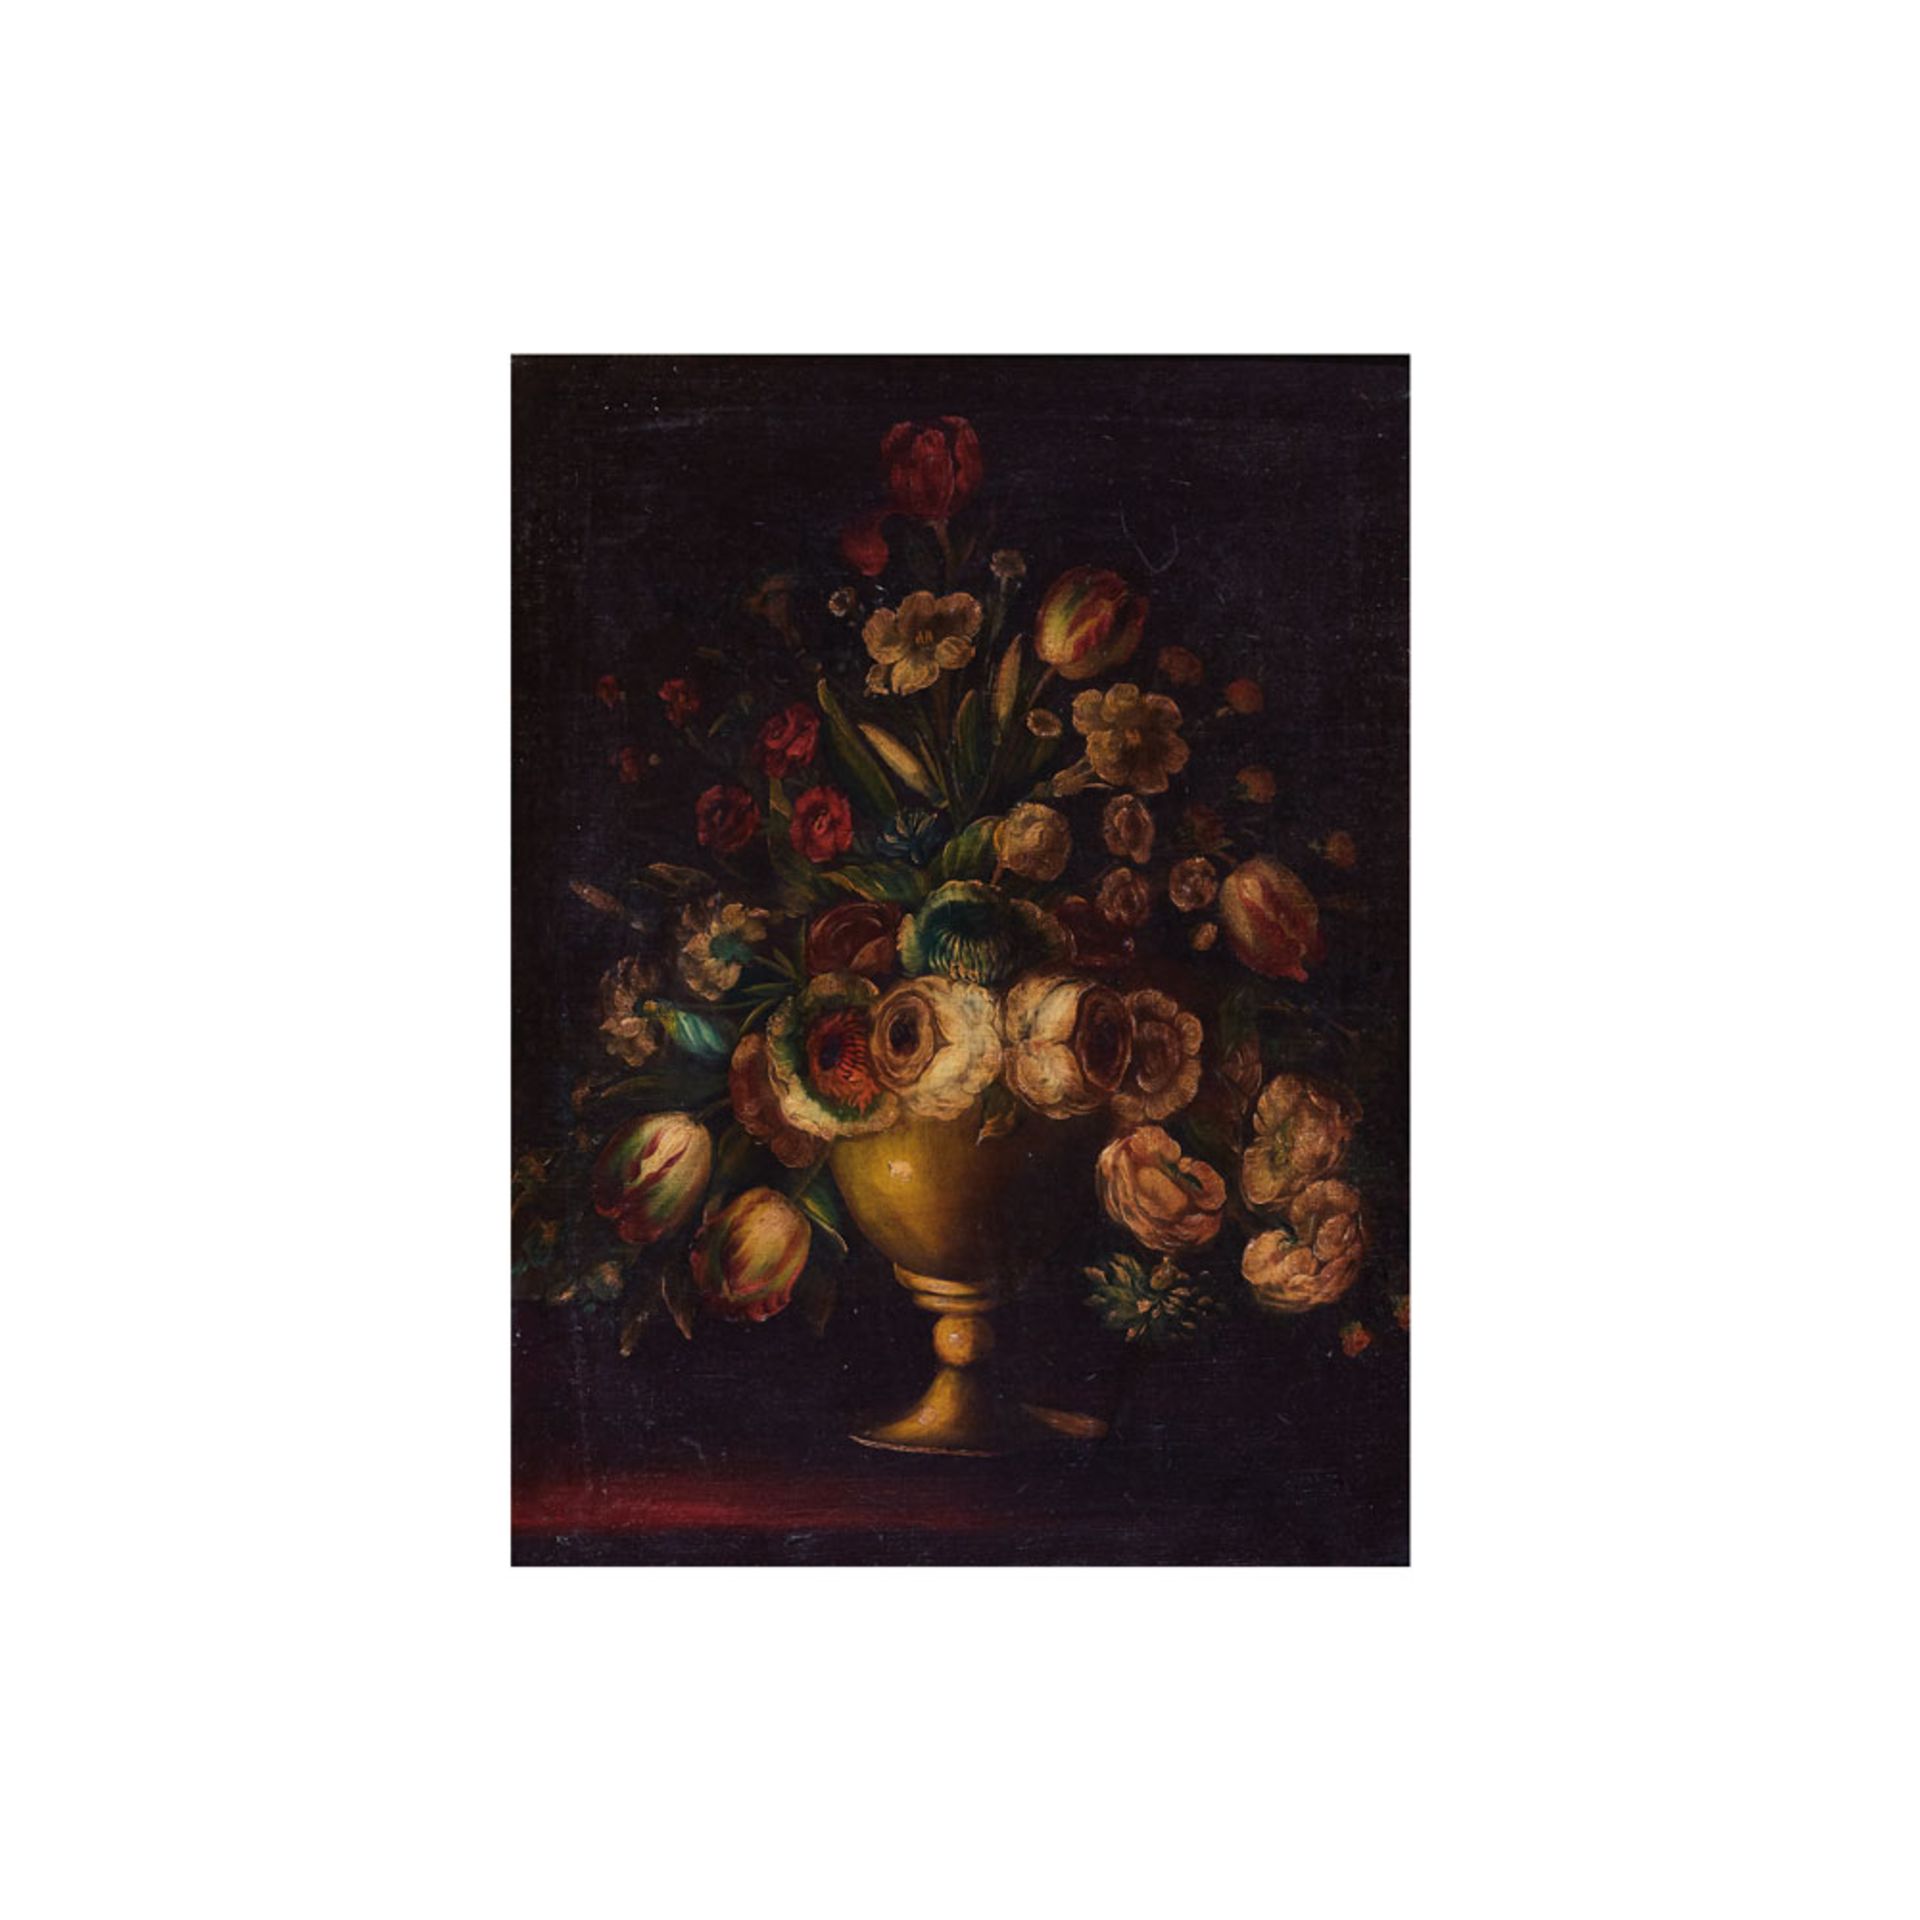 Escuela española, s.XIX. Jarrón con flores. Óleo sobre tela. 60 x 45 cm.